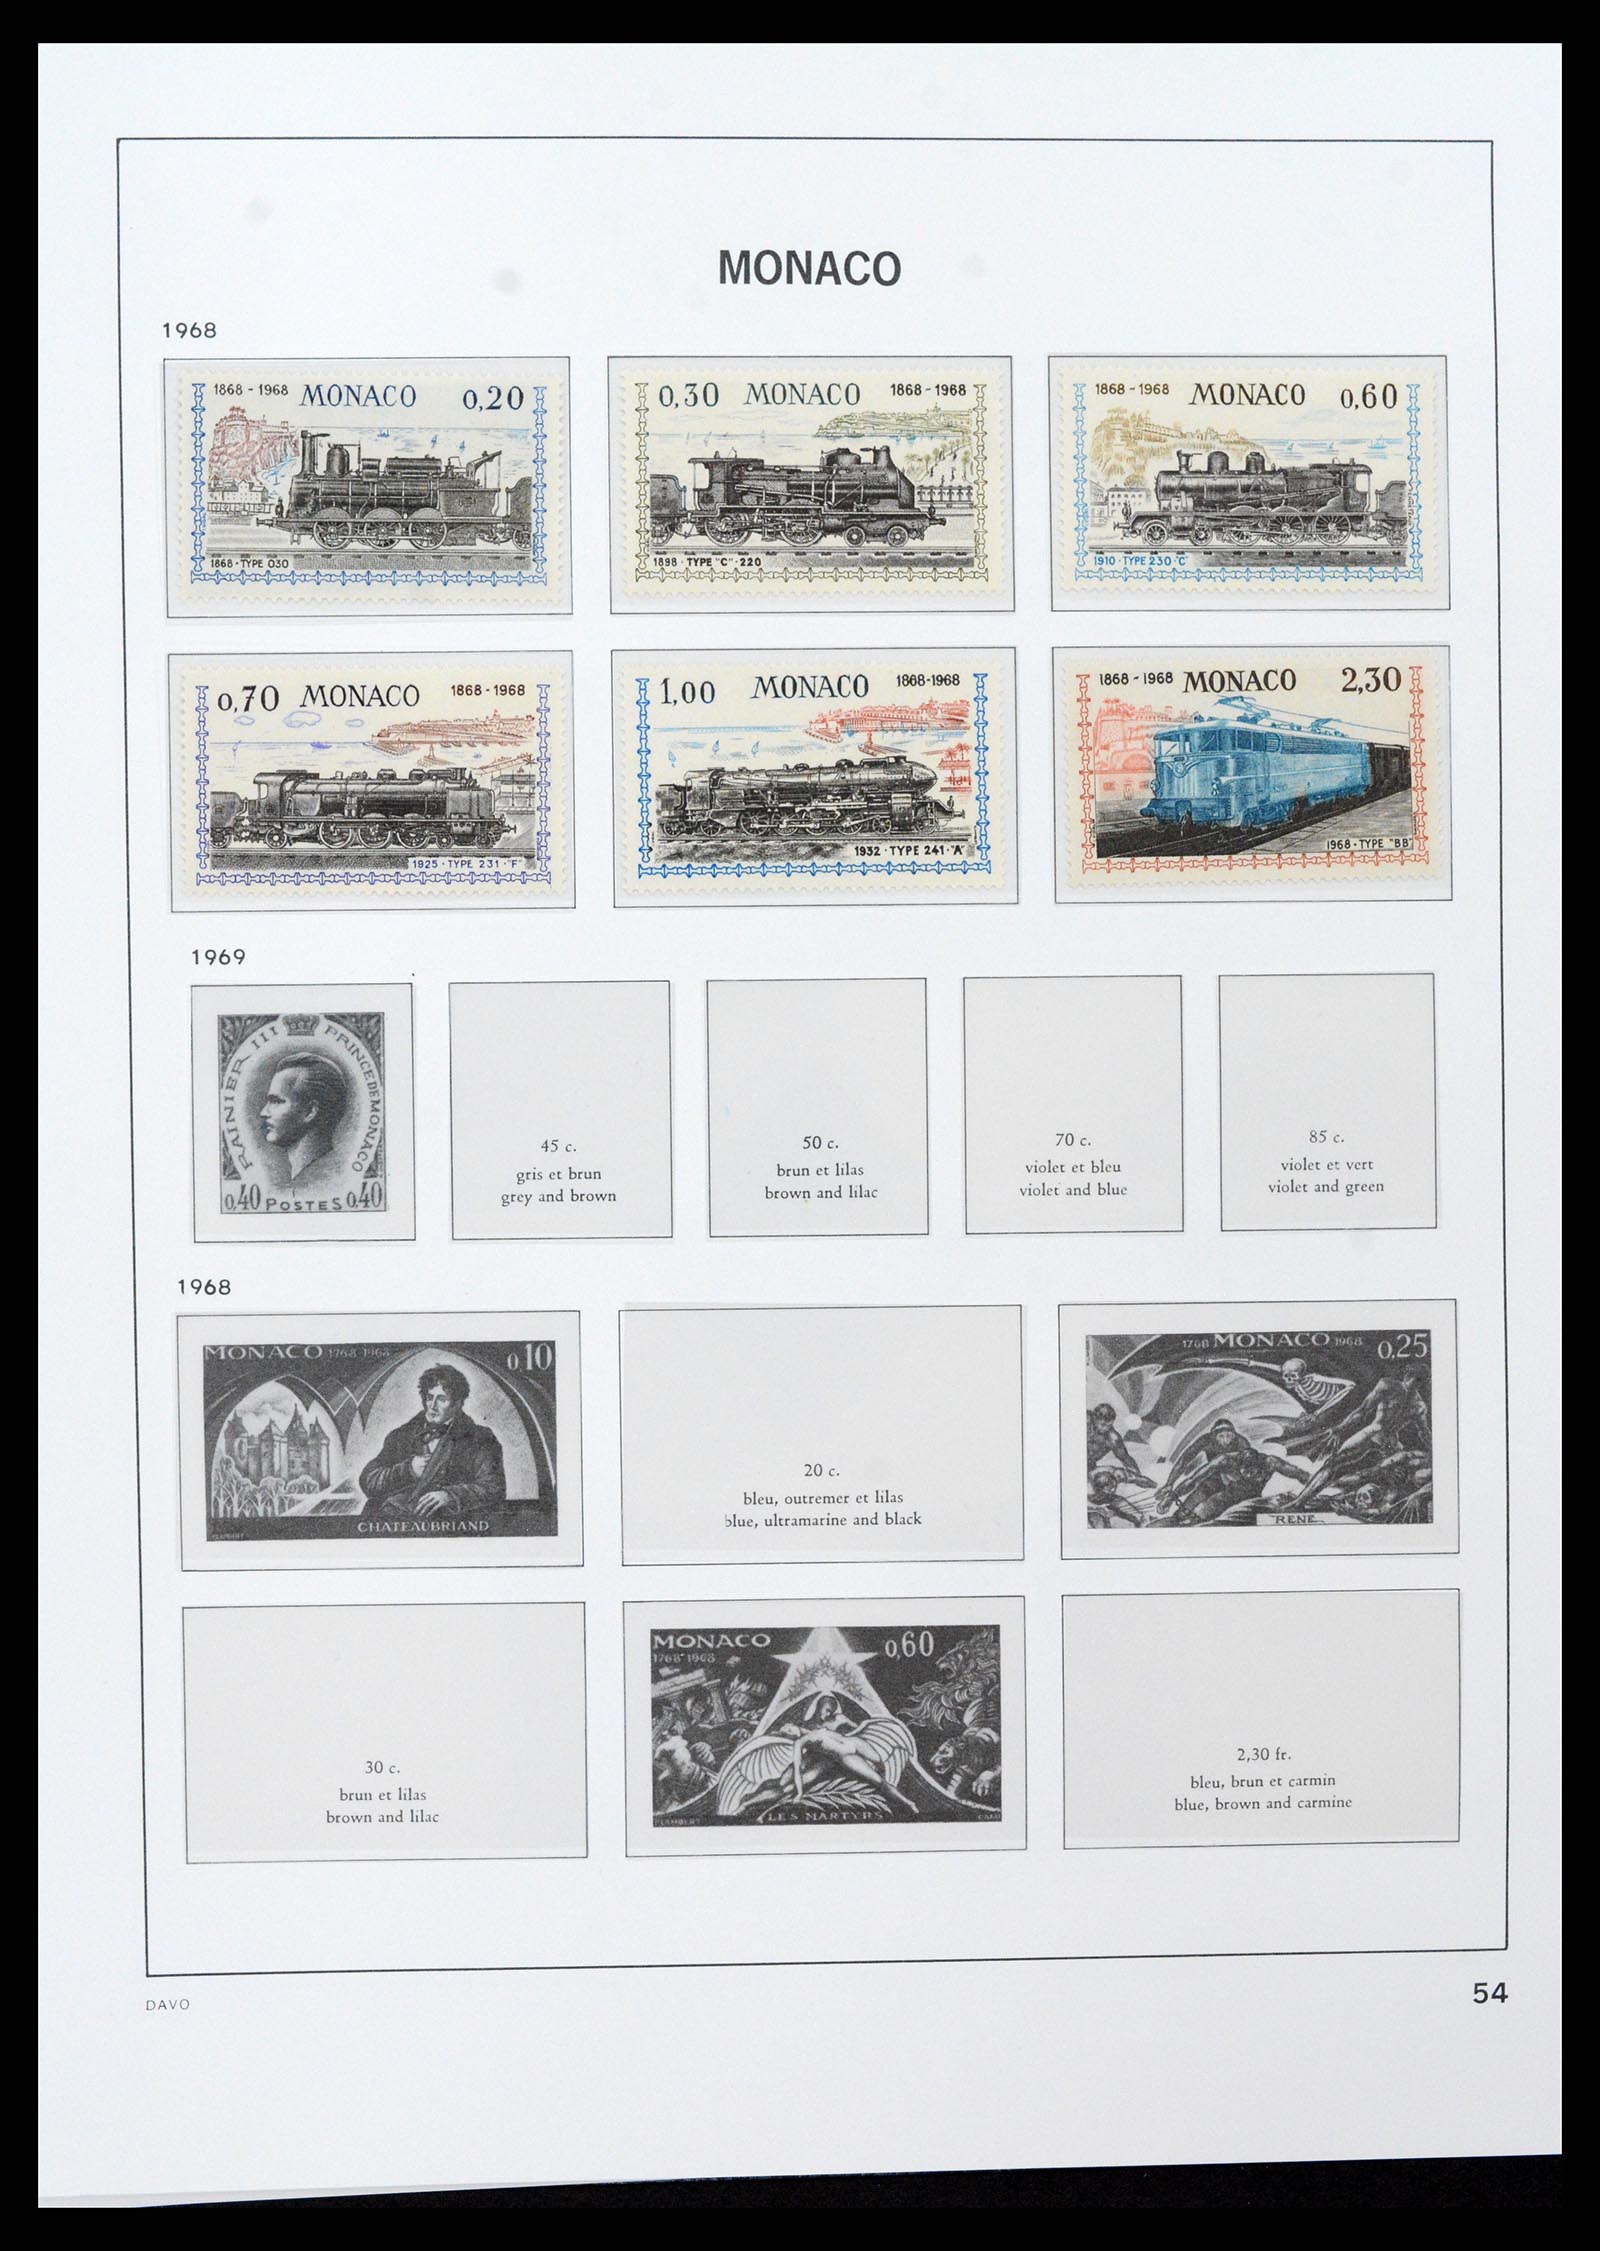 37279 054 - Stamp collection 37279 Monaco 1885-1969.